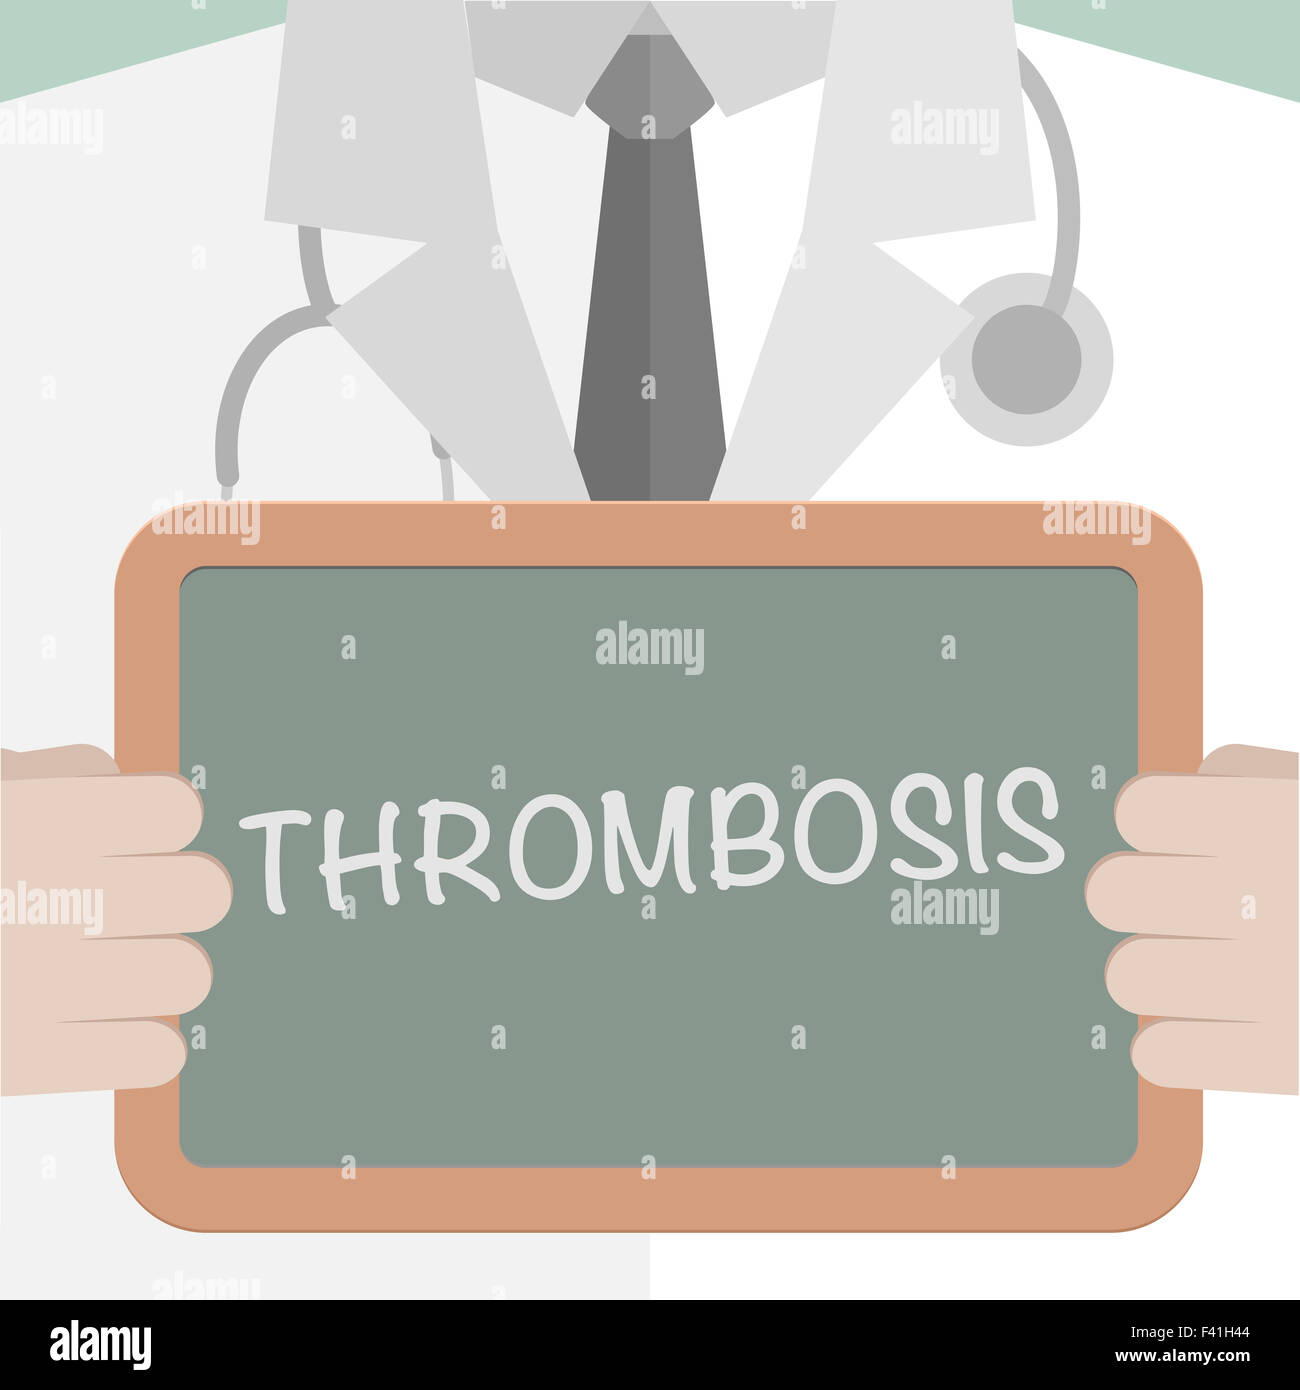 Medical Board Thrombosis Stock Photo